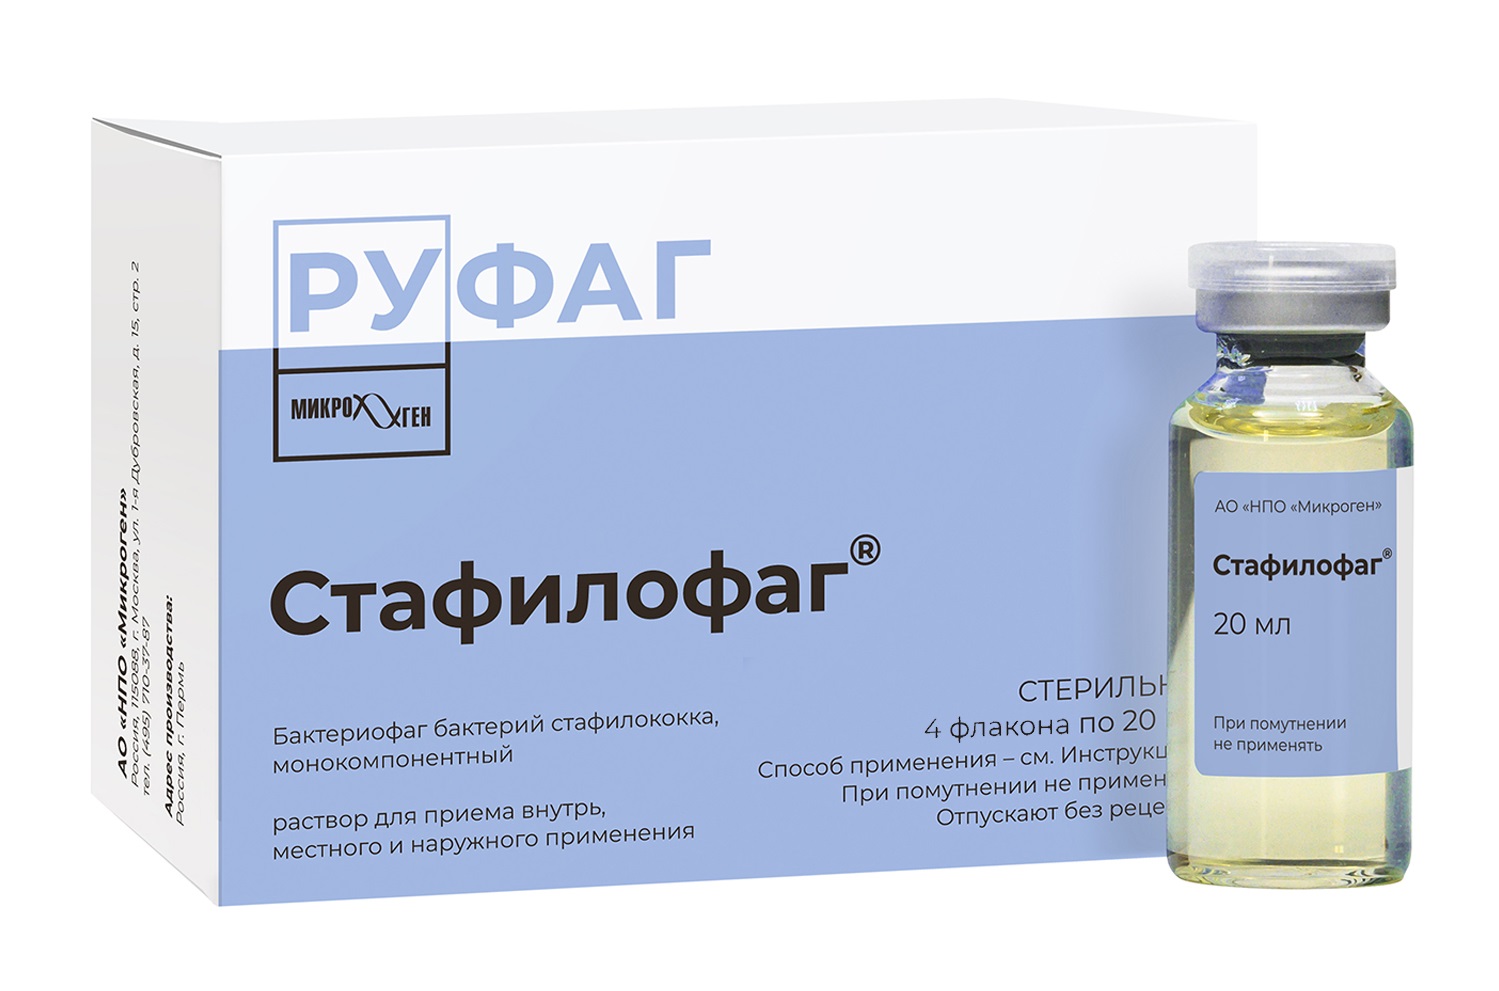 Стафилофаг® (Бактериофаг стафилококковый) - 20 мл